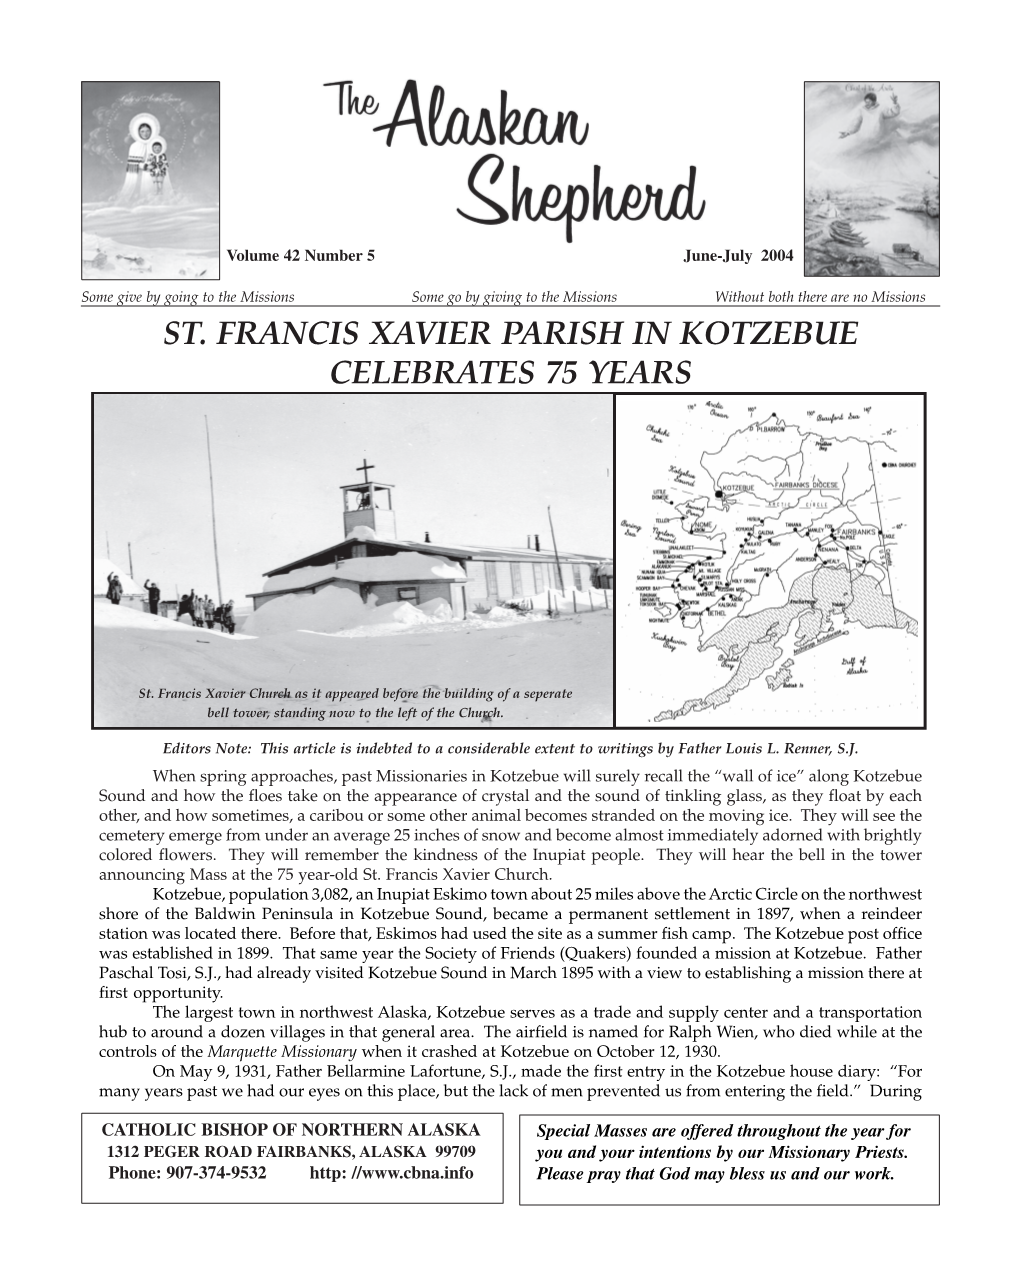 St. Francis Xavier Parish in Kotzebue Celebrates 75 Years